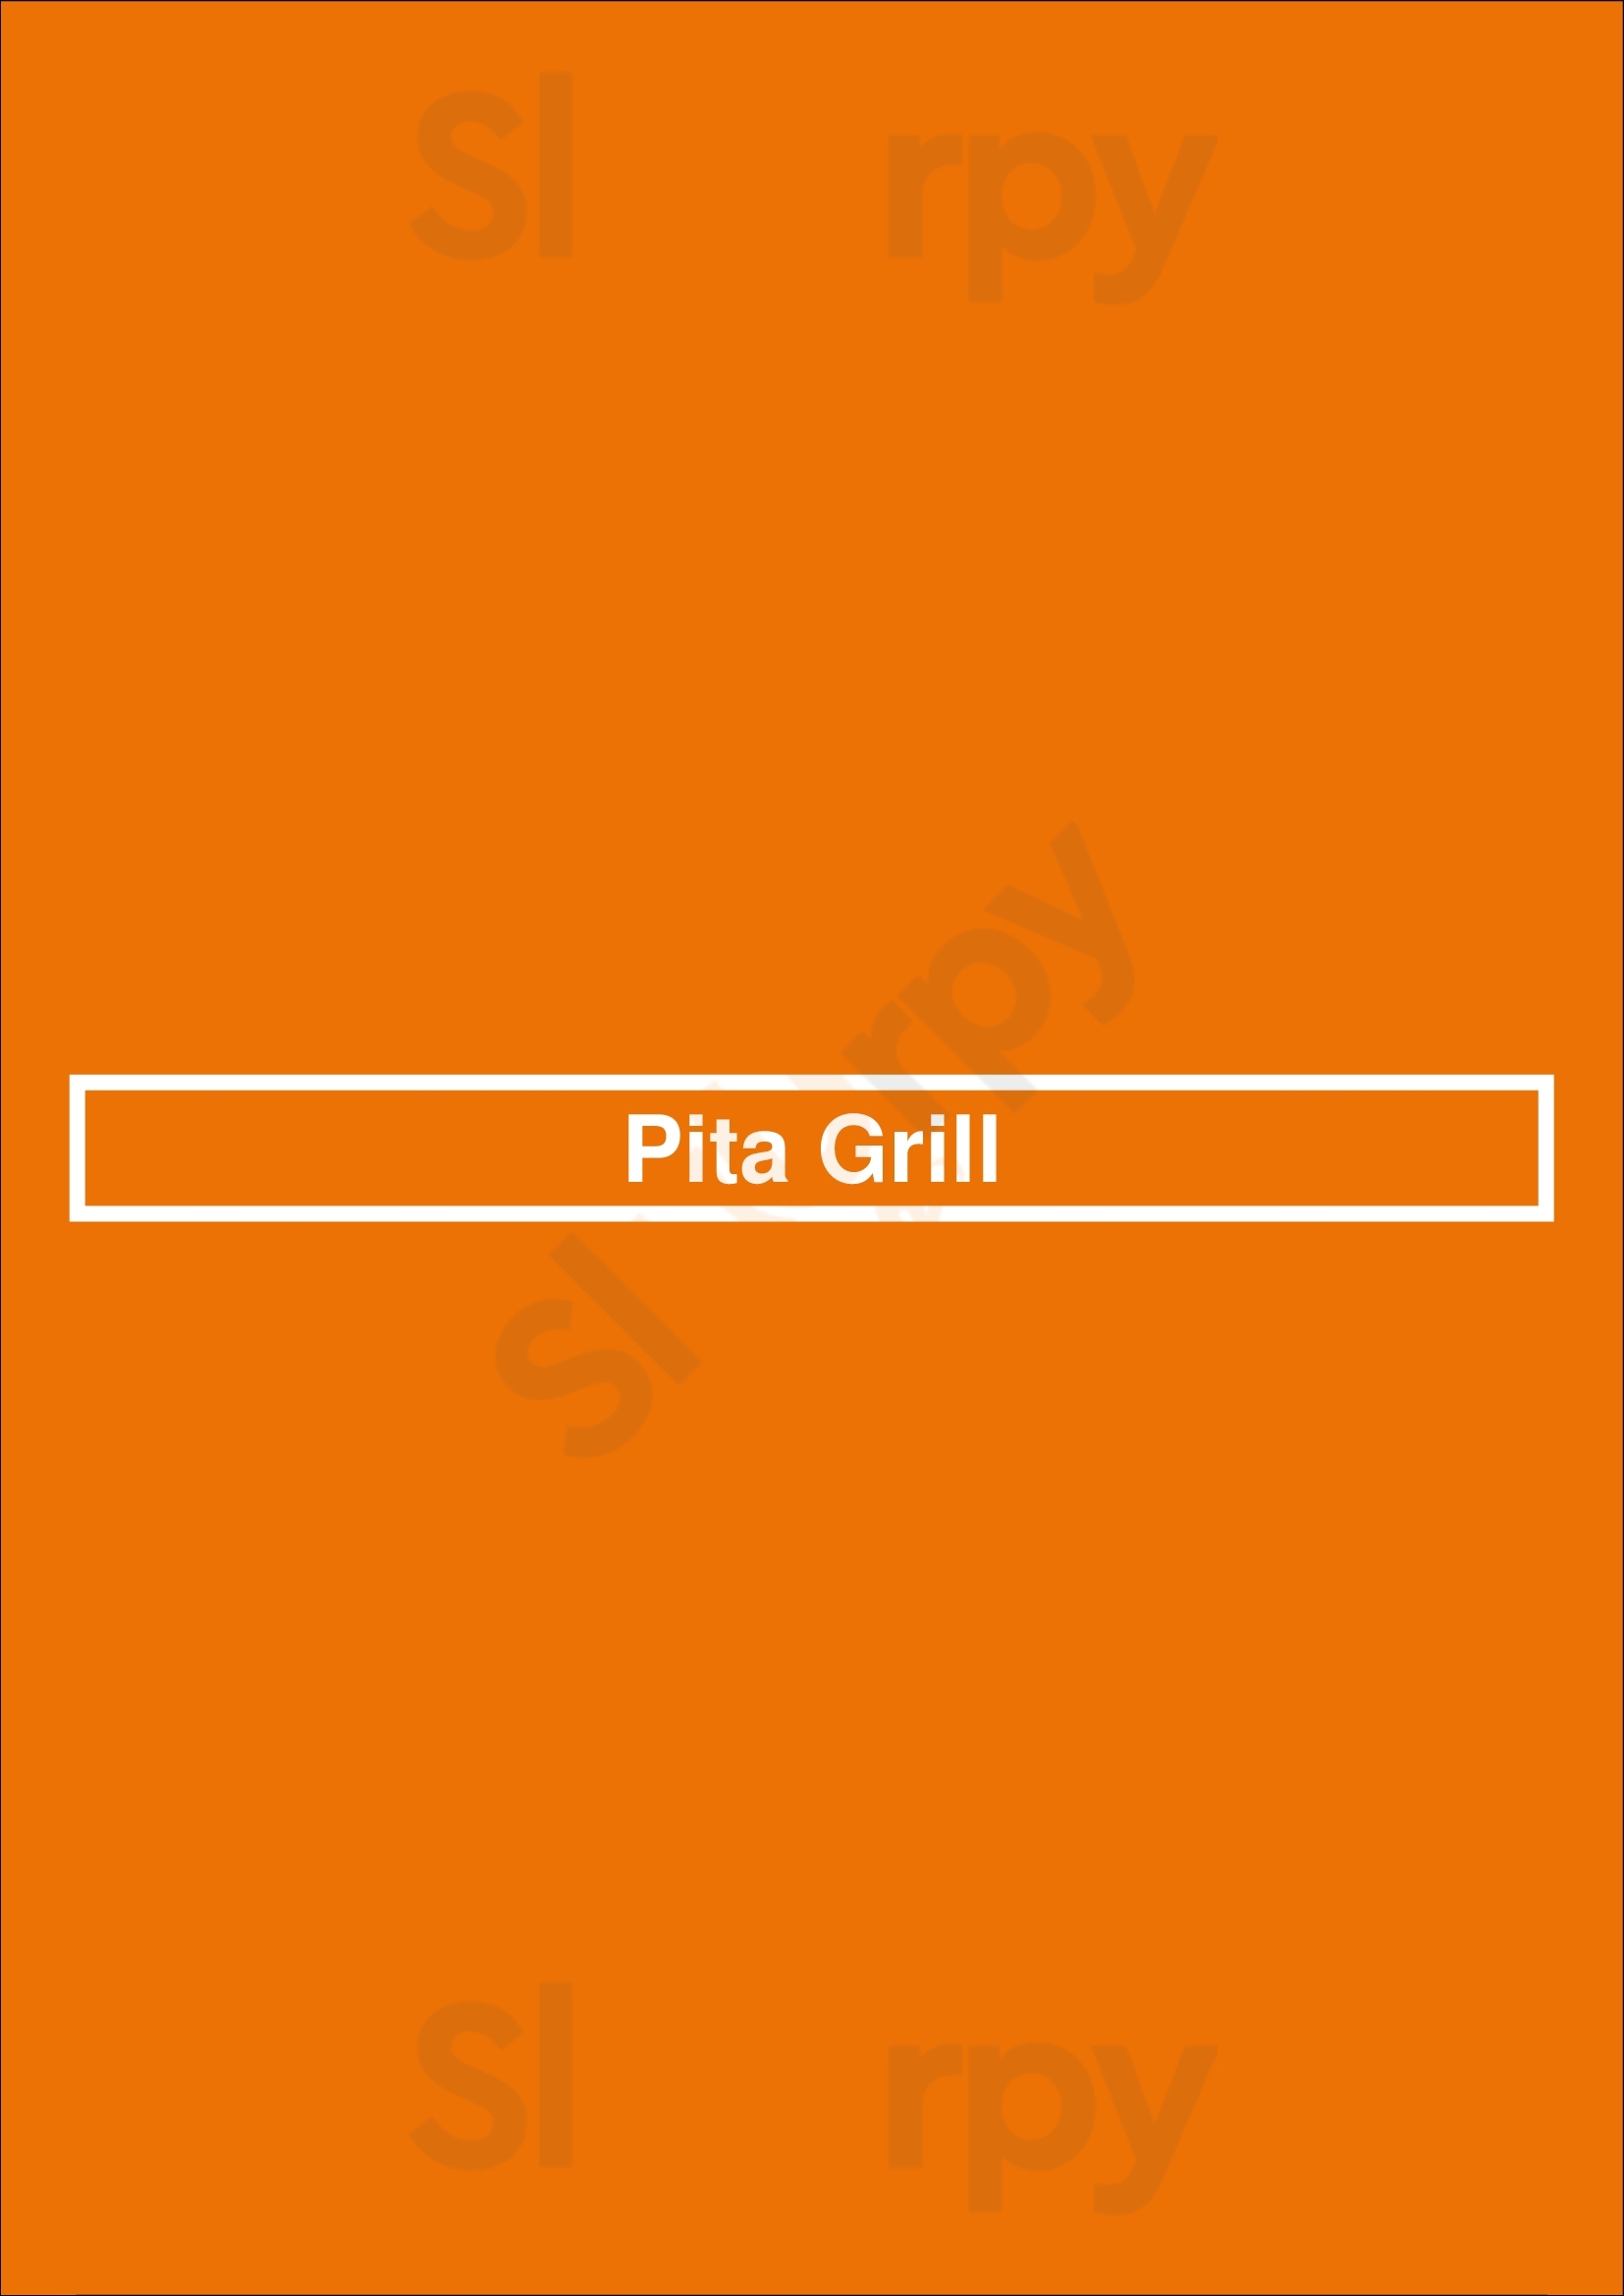 Pita Grill Chicago Menu - 1